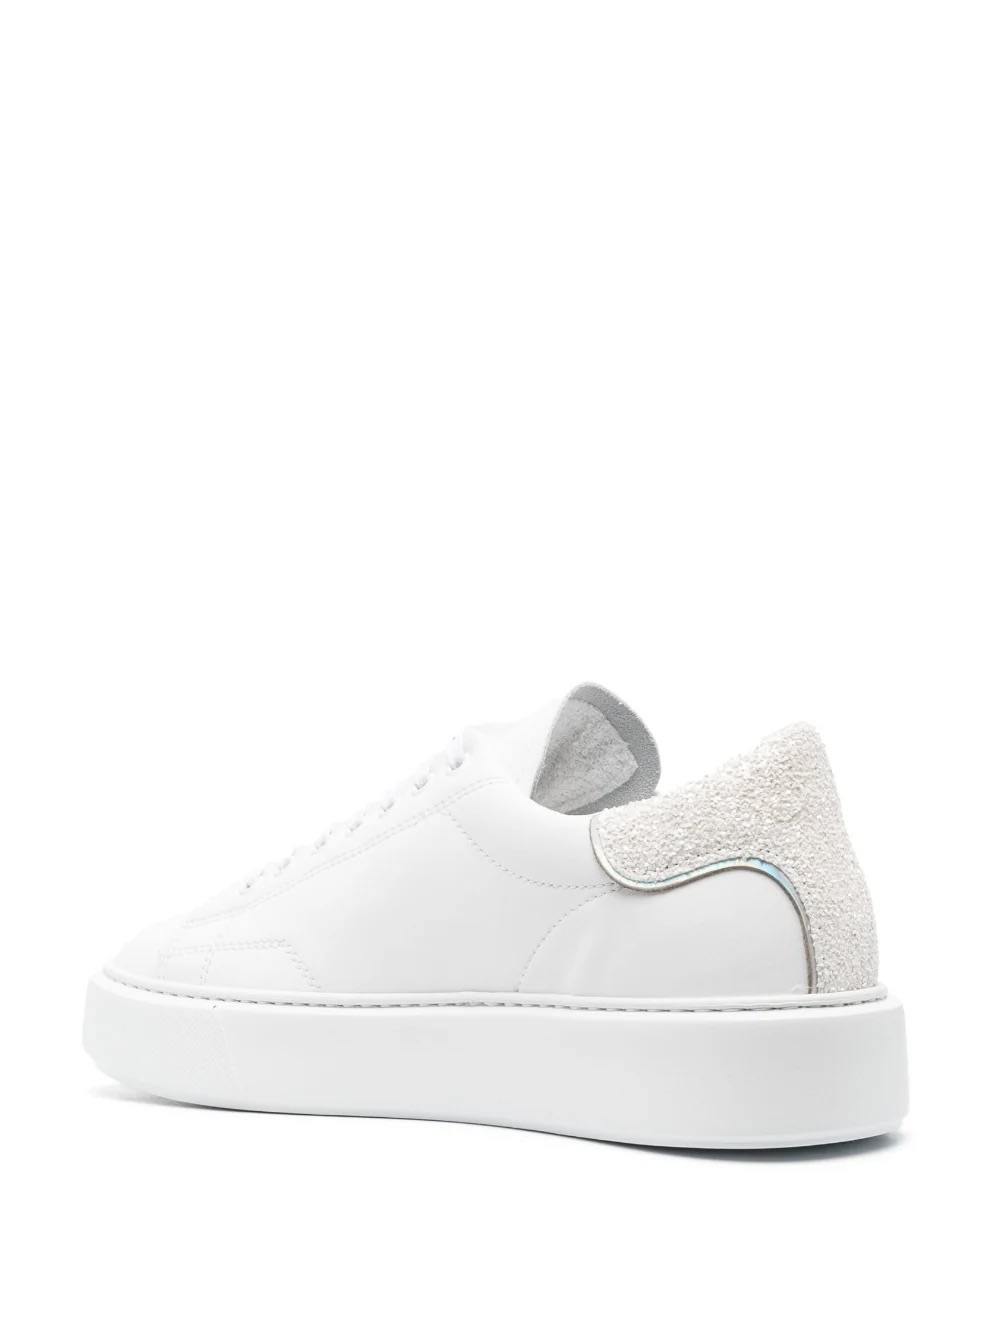 pensum Dovenskab Ombord D.a.t.e. White Sfera Glitter Sneakers In Bianco | ModeSens